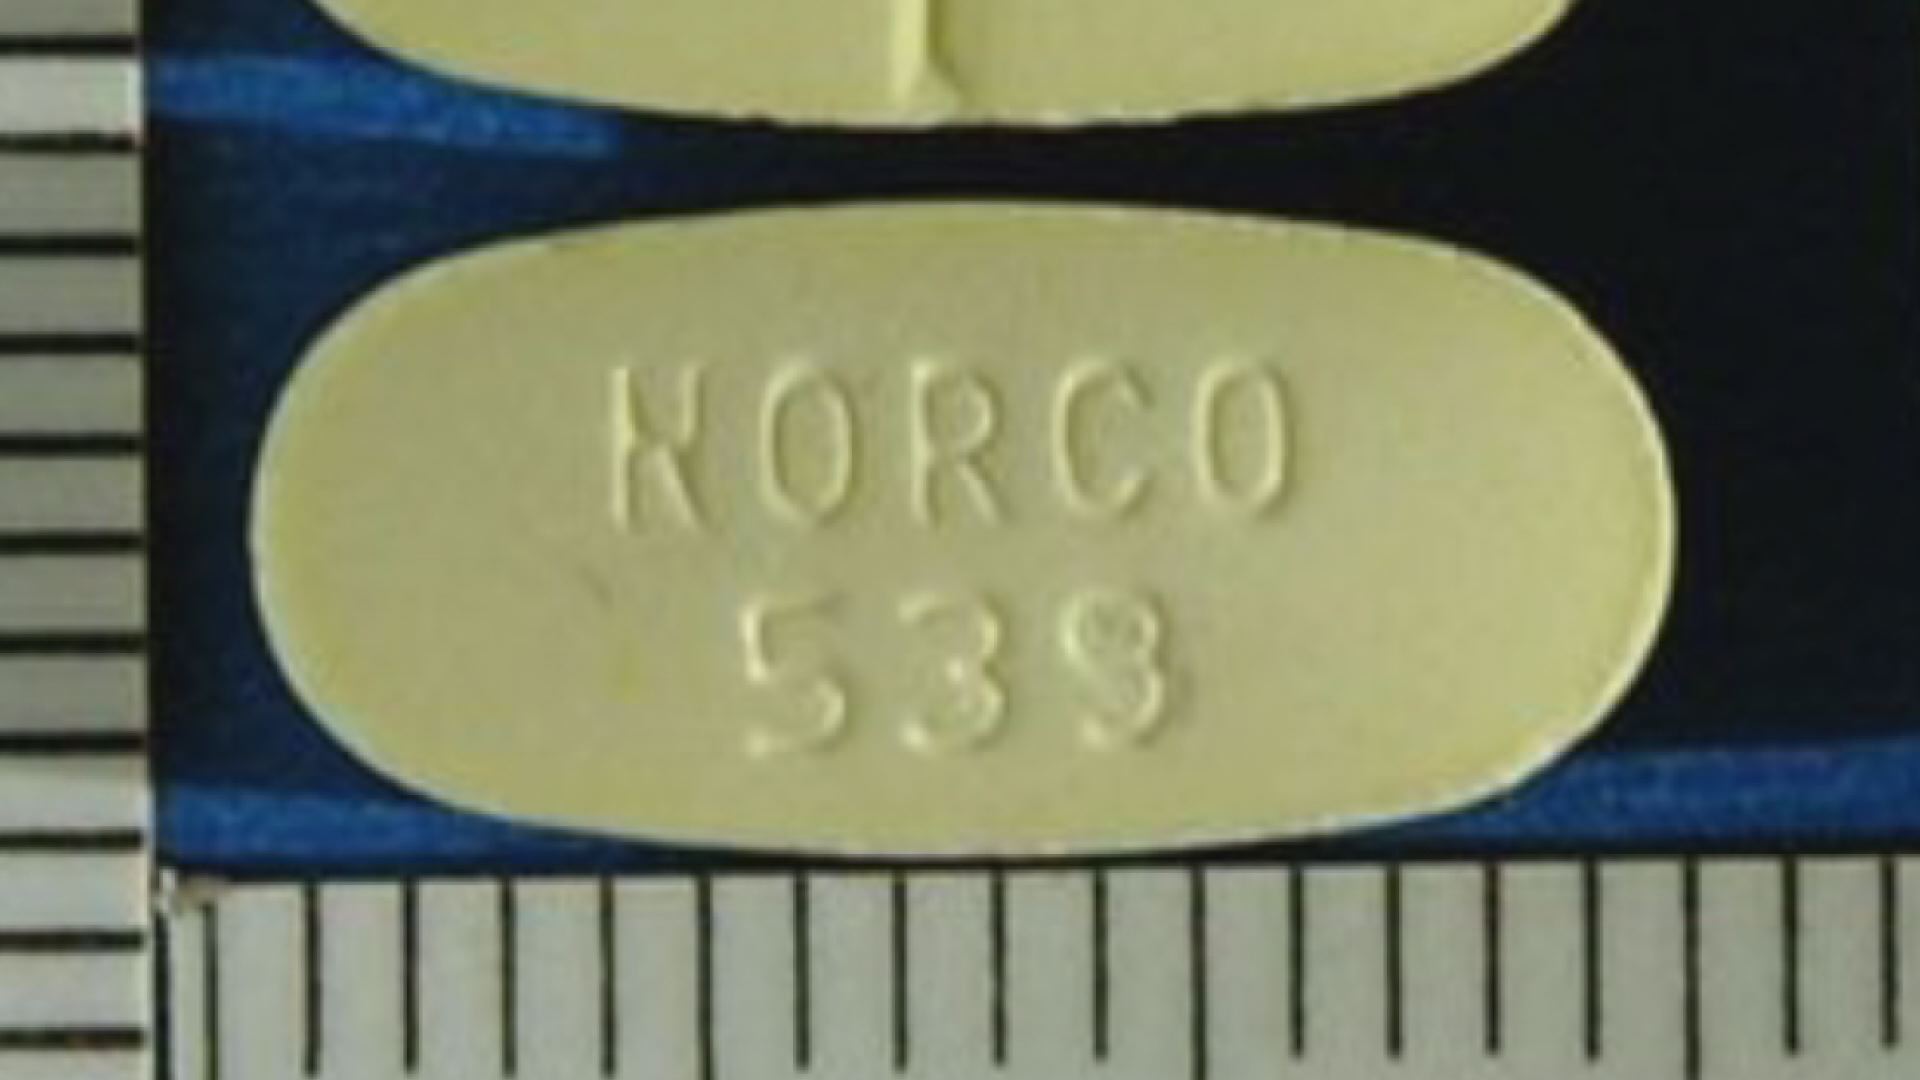 norco drugs